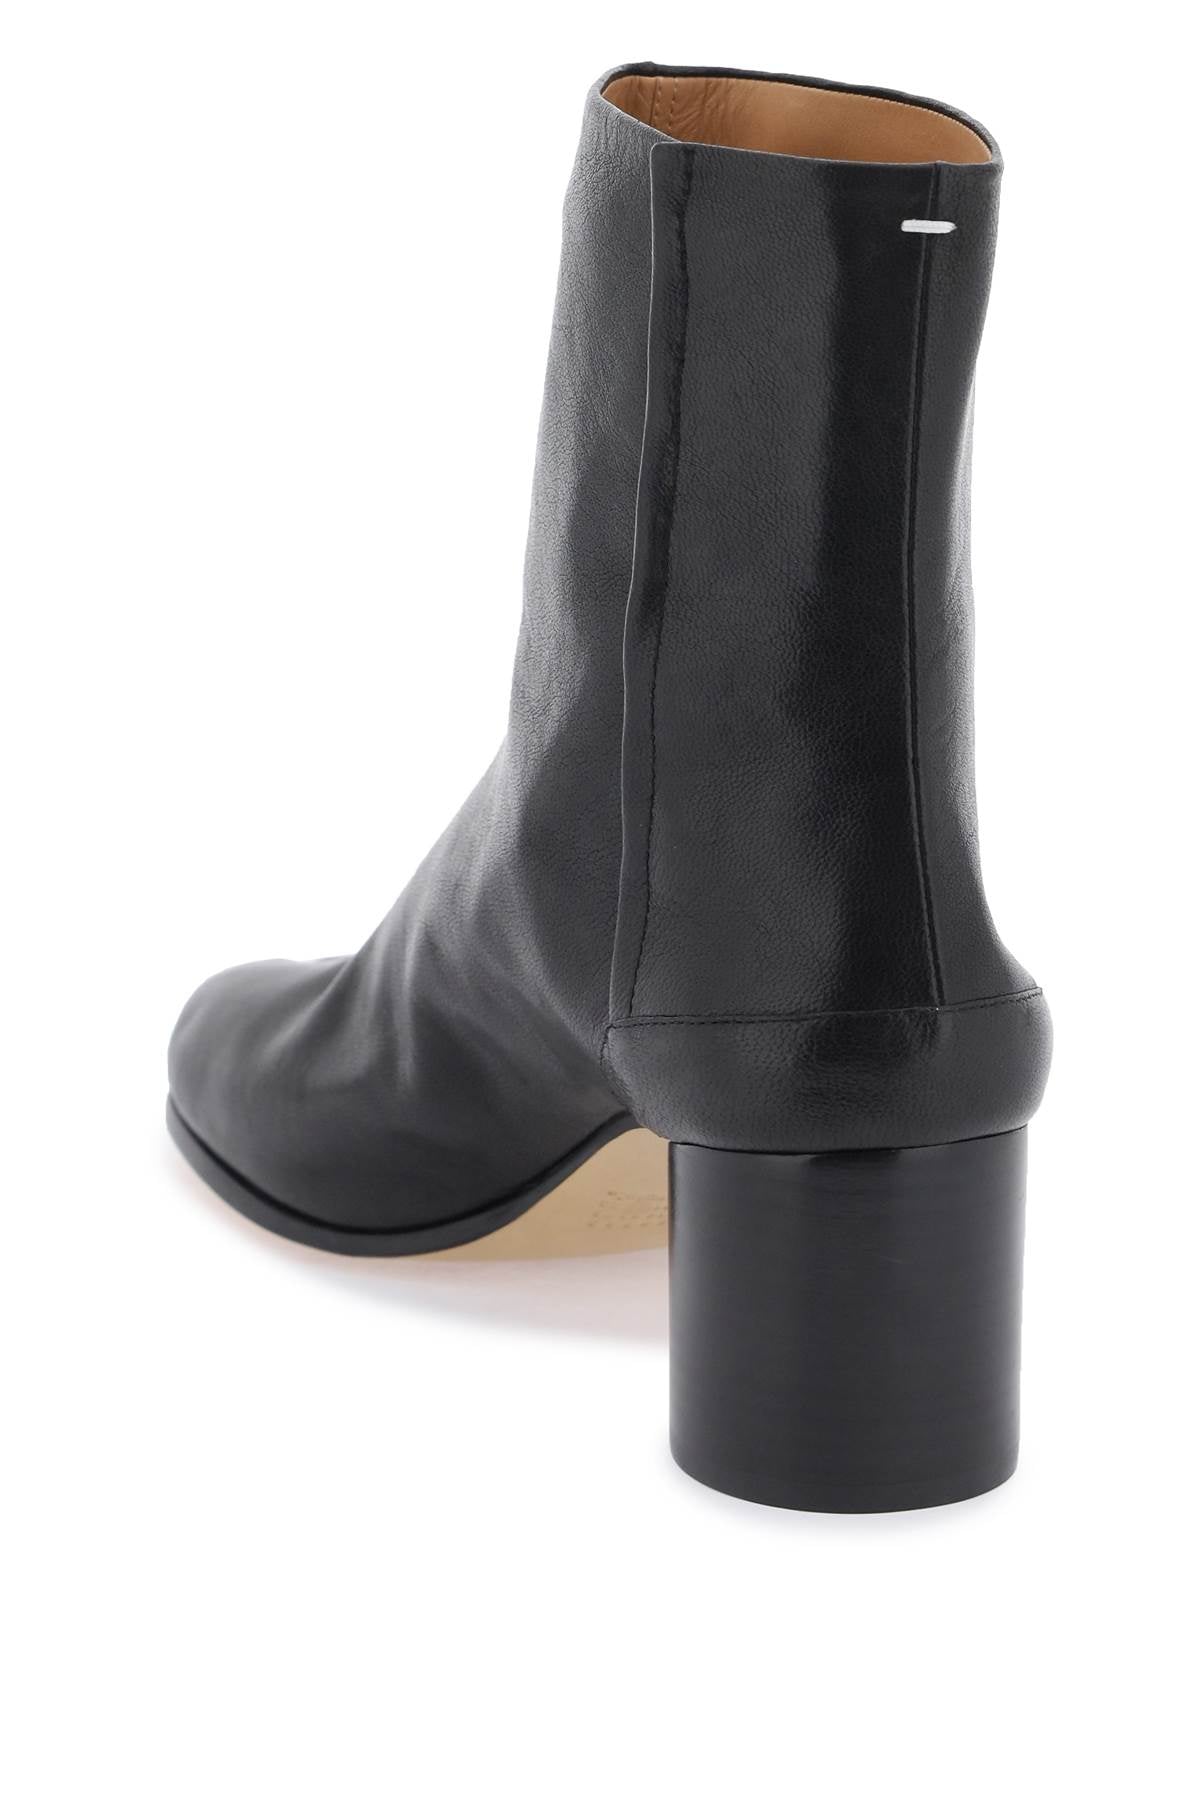 Maison margiela leather tabi ankle boots-2